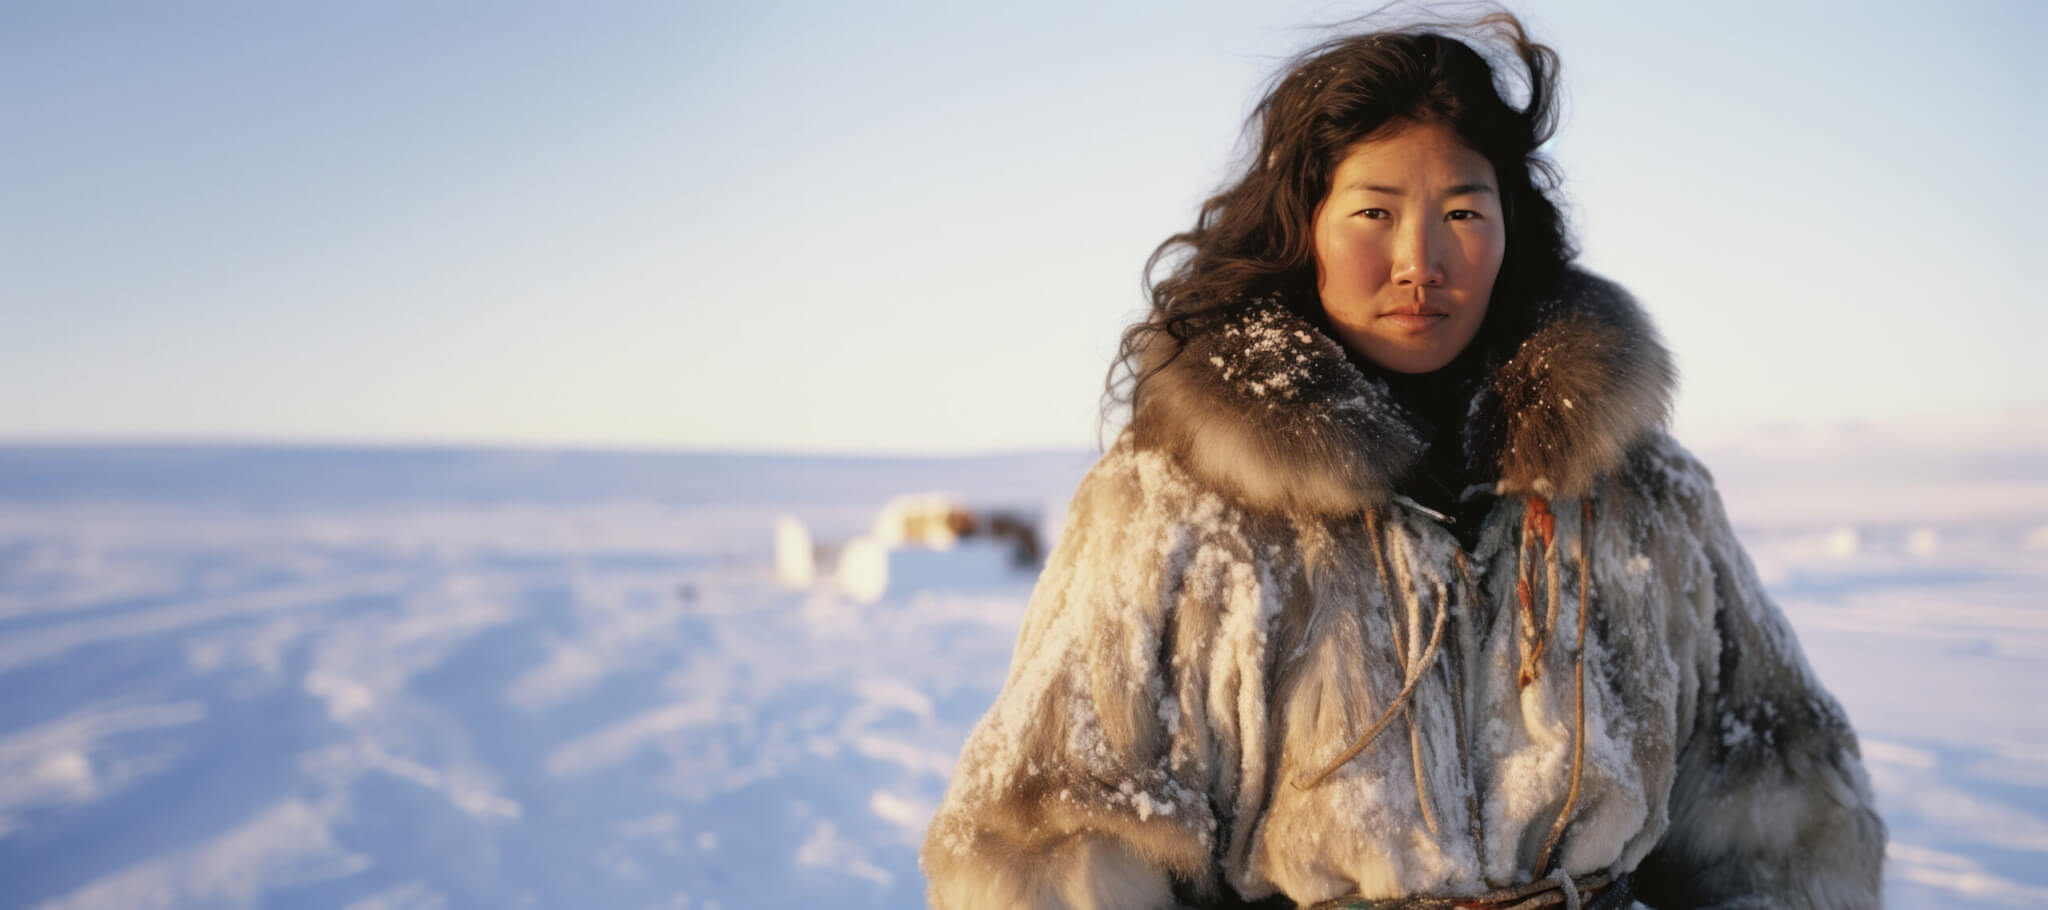 Inuit woman in traditional fur attire in Alaskan wilderness